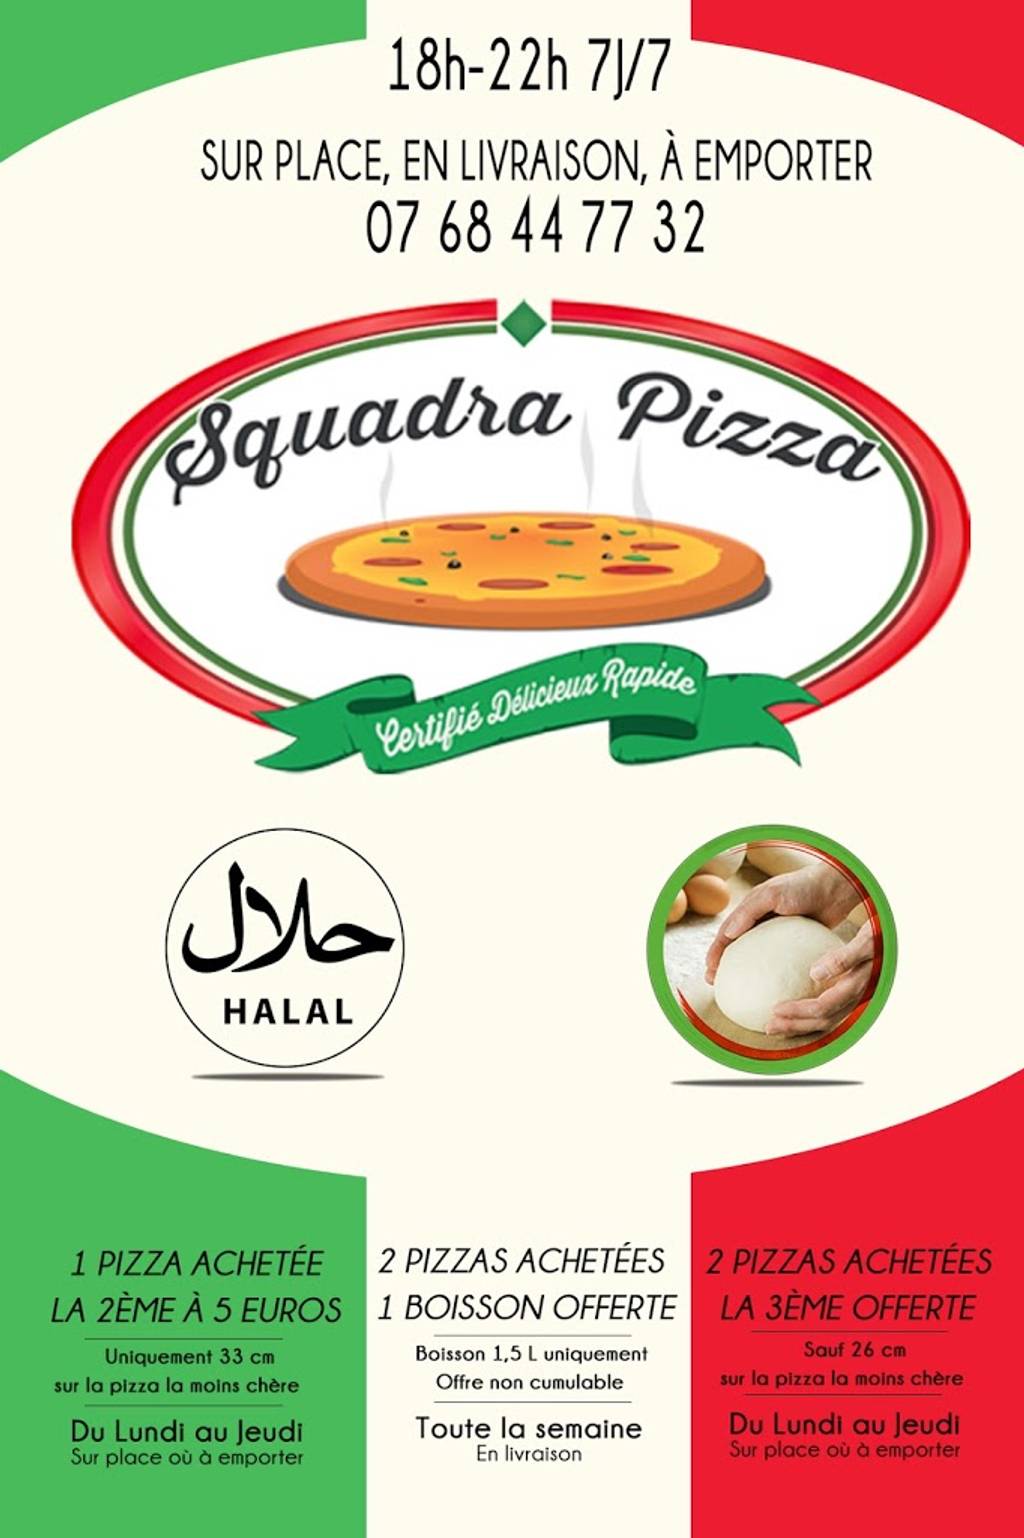 Squadra pizza Fast-food Chambéry - Flyer Food Dish Recipe Advertising